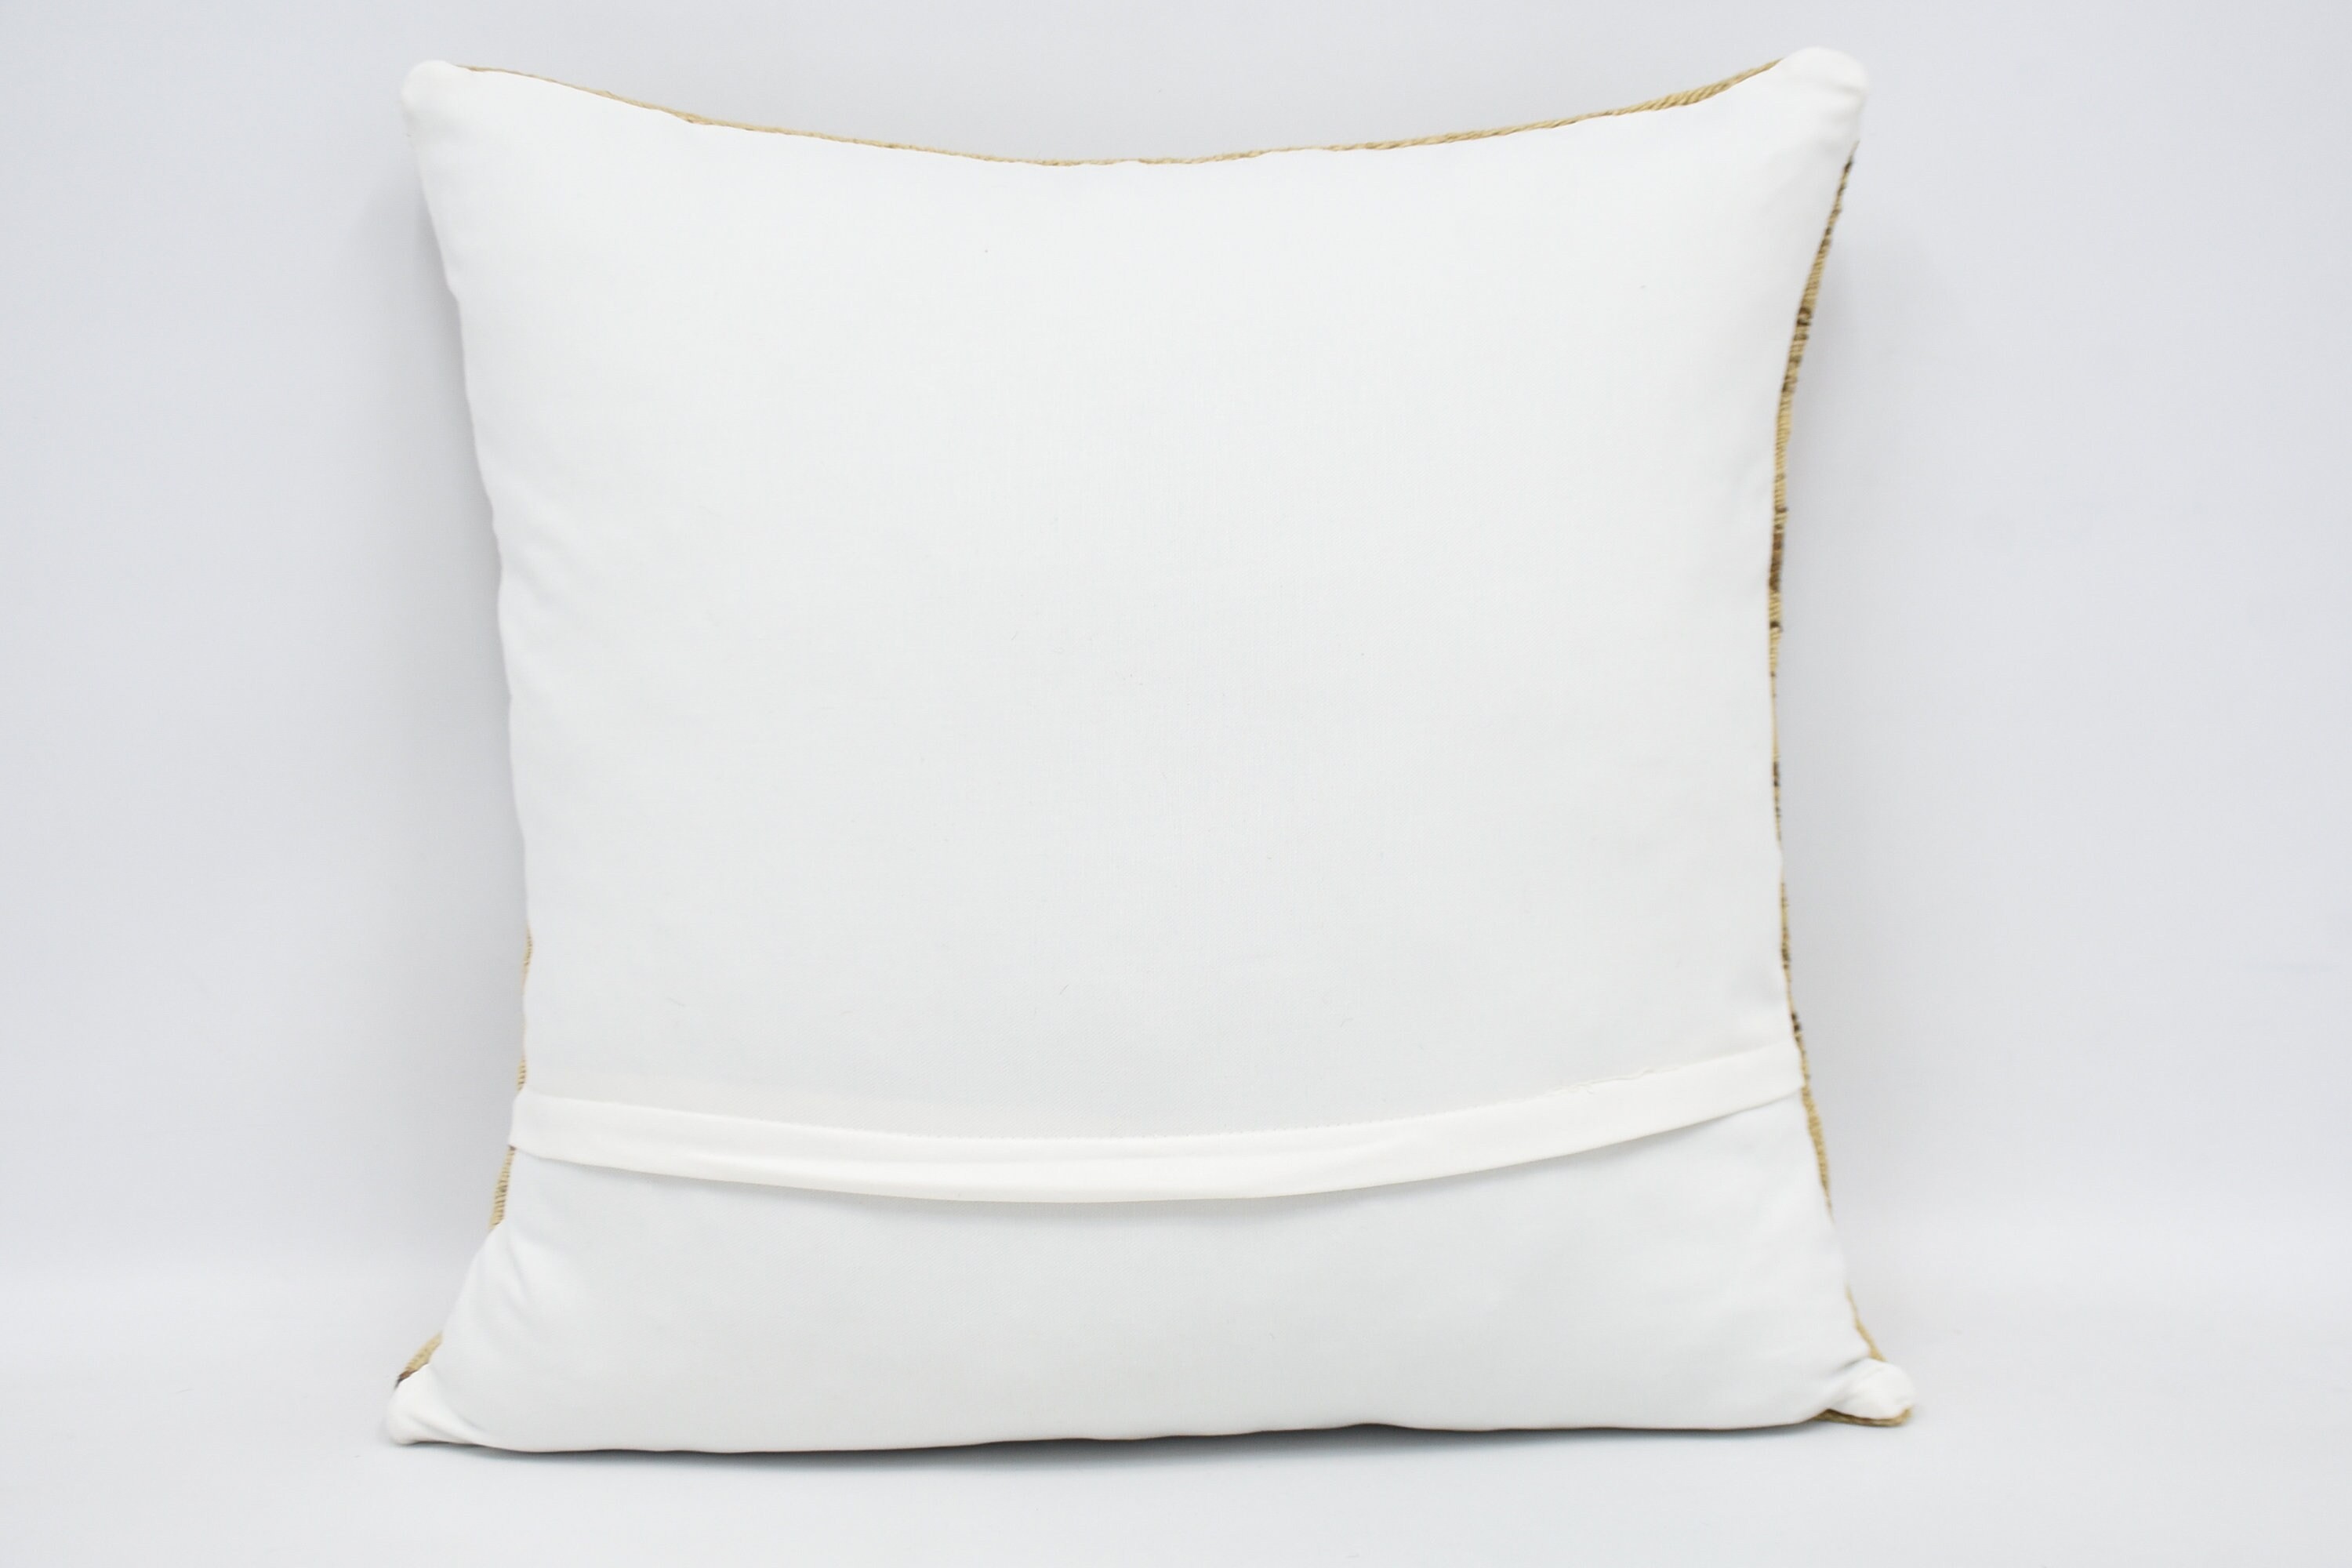 Authentic Pillow Case, Kilim Pillow, 24"x24" Beige Pillow Cover, Ethnic Pillow Case, Handmade Kilim Cushion, Home Decor Pillow, Bed Pillow